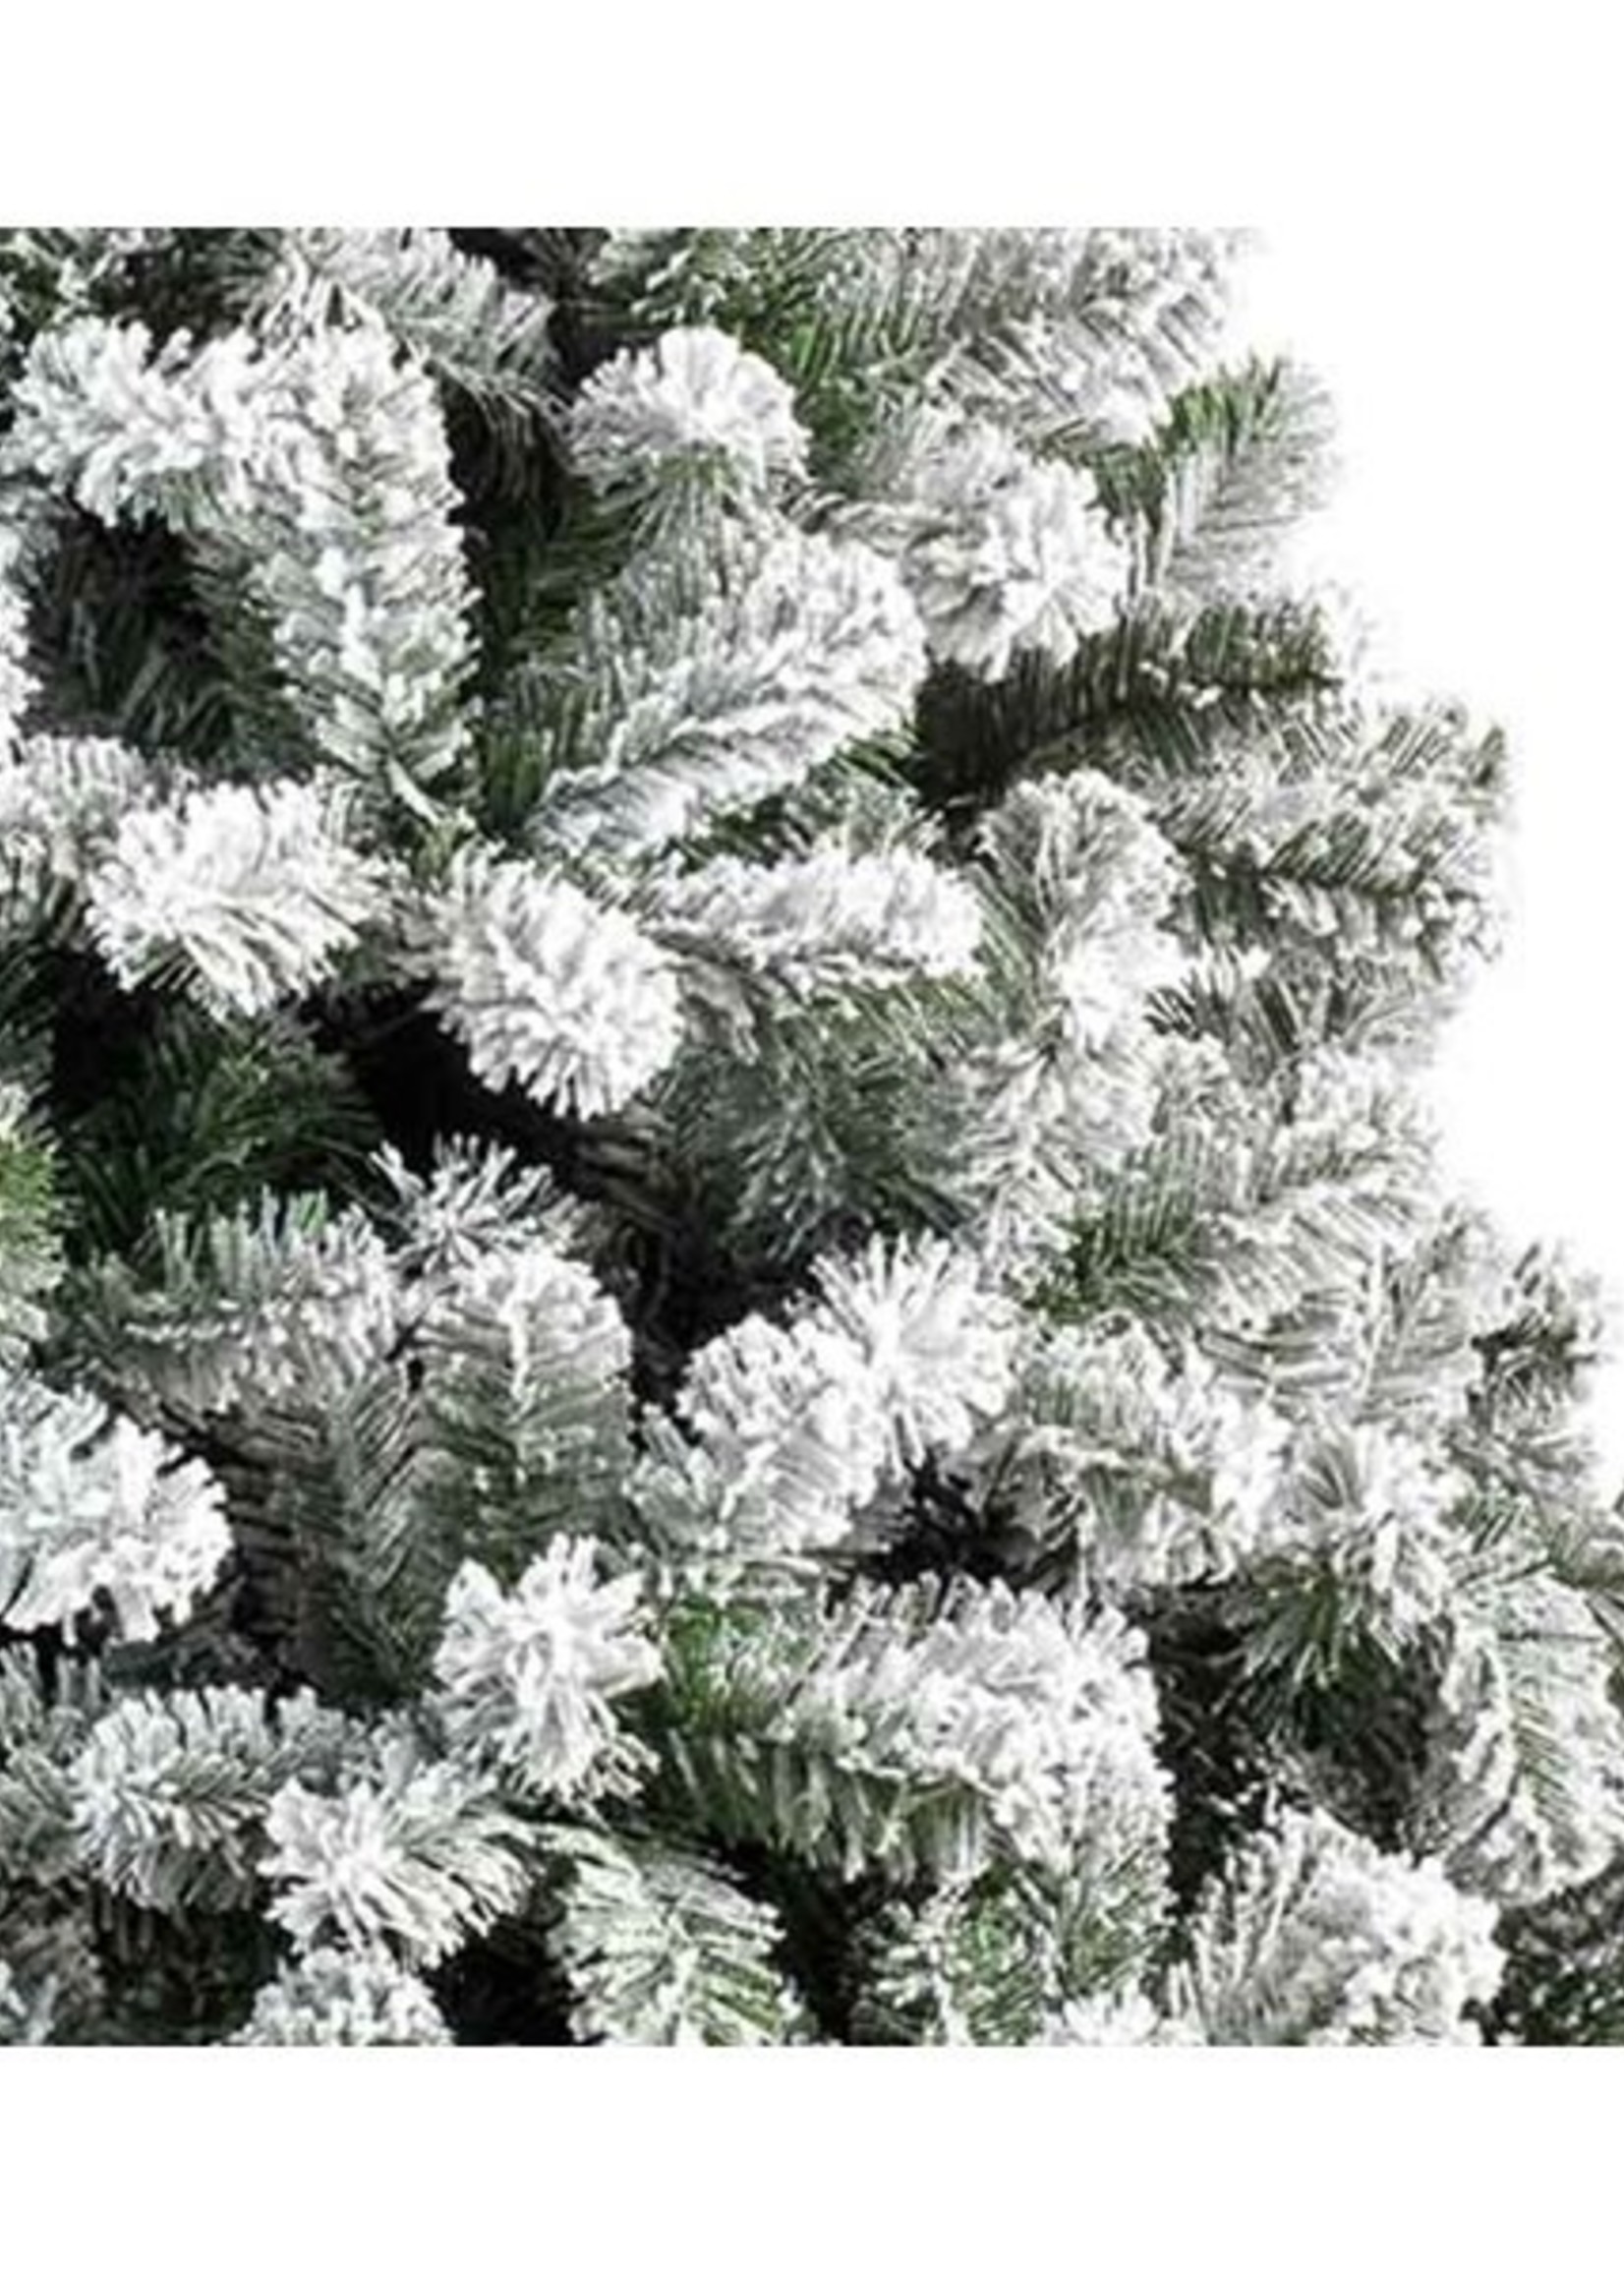 Everlands Kunstkerstboom Imperial Pine besneeuwd 150cm hoog diameter 97 cm